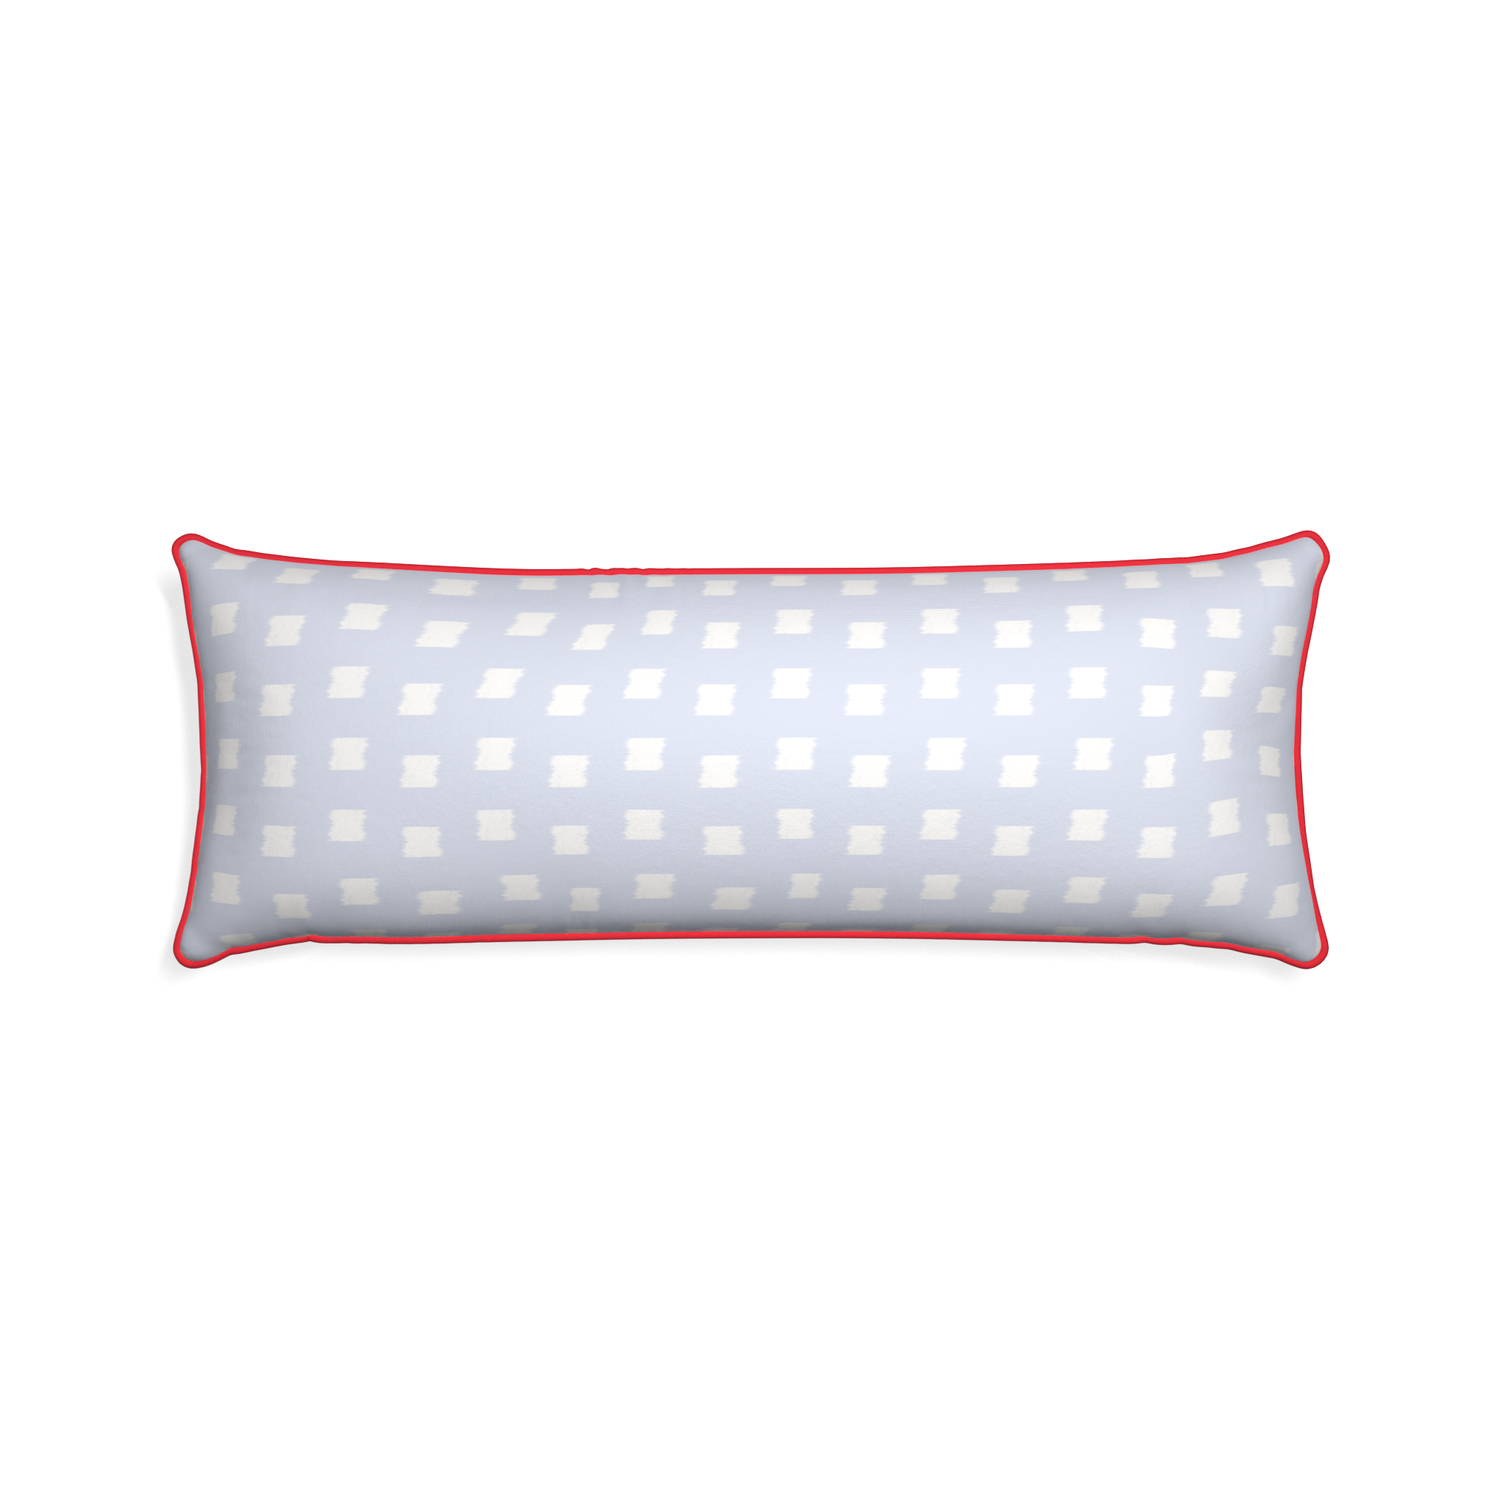 Xl-lumbar denton custom pillow with cherry piping on white background